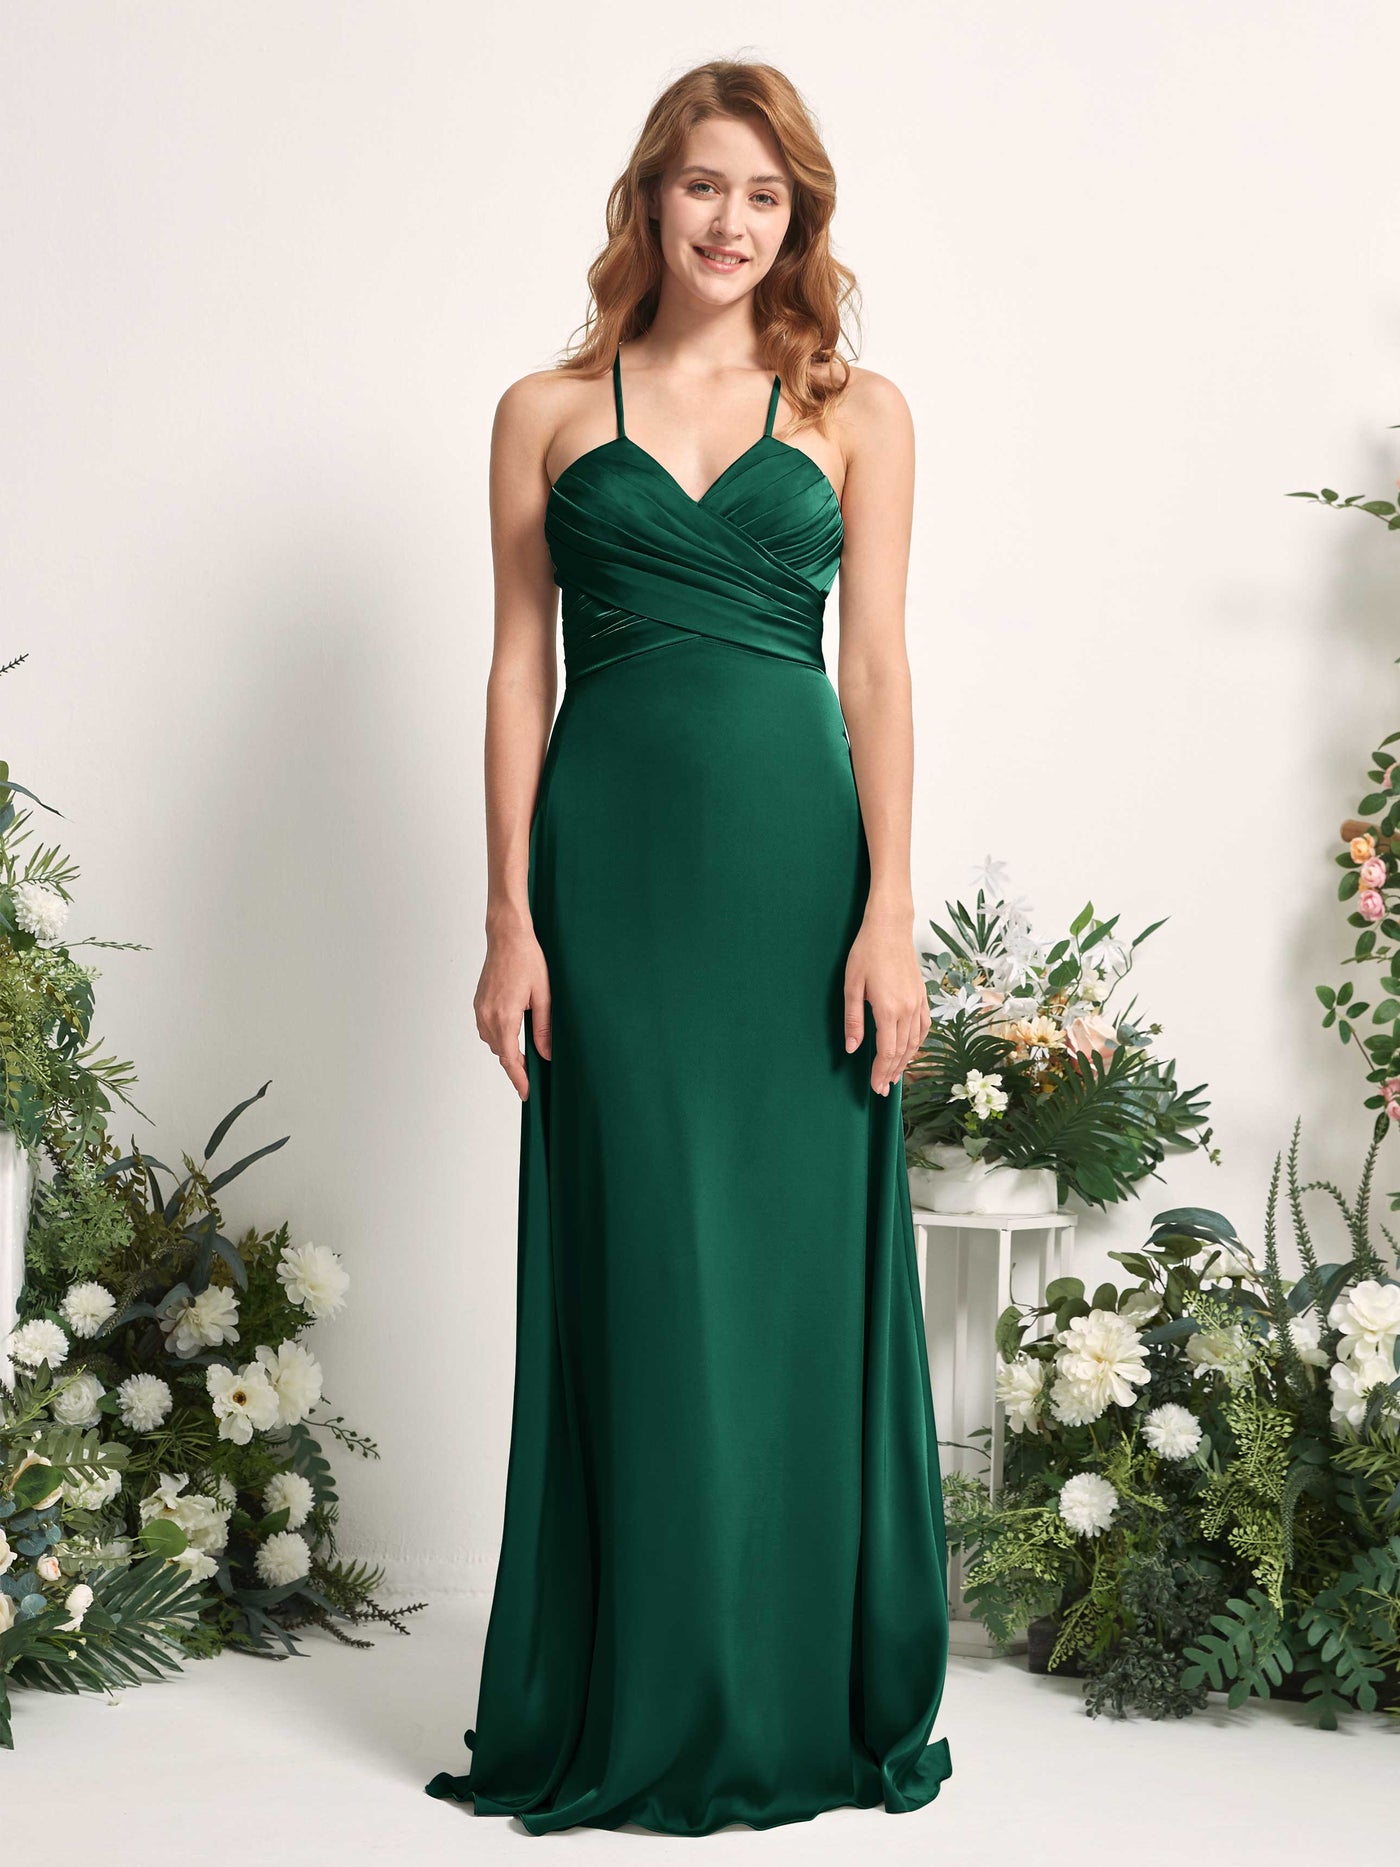 Hunter Green Bridesmaid Dresses Bridesmaid Dress A-line Satin Spaghetti-straps Full Length Sleeveless Wedding Party Dress (80225729)#color_hunter-green